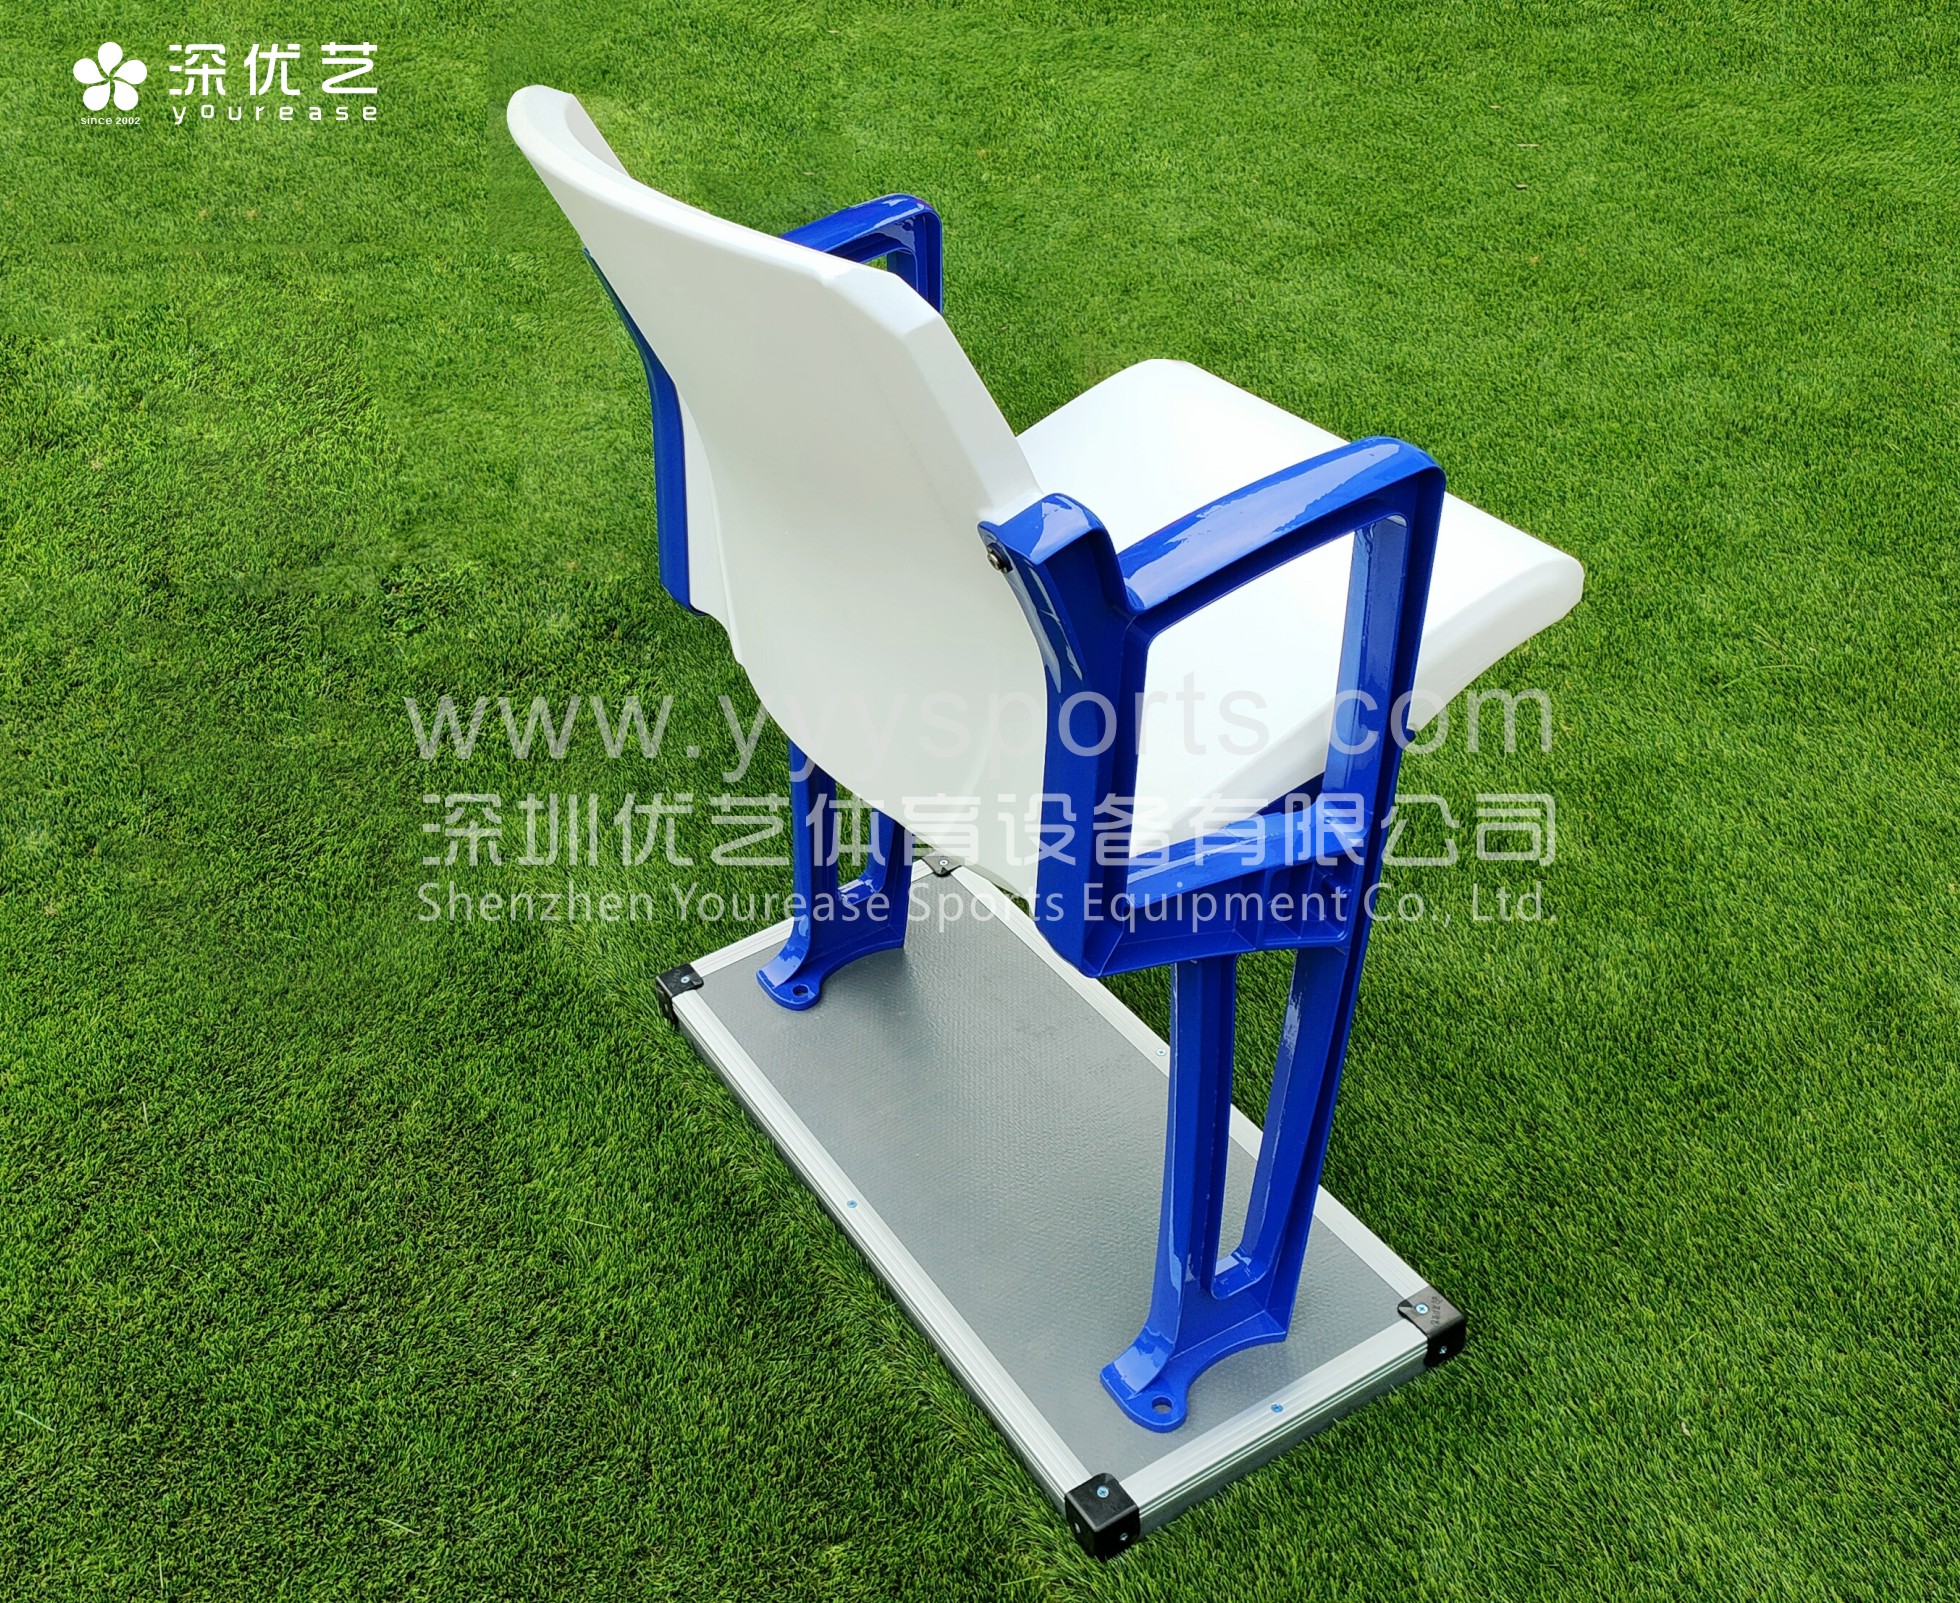 Yourease Football Plastic Stadium Chair Nqe Featured Image